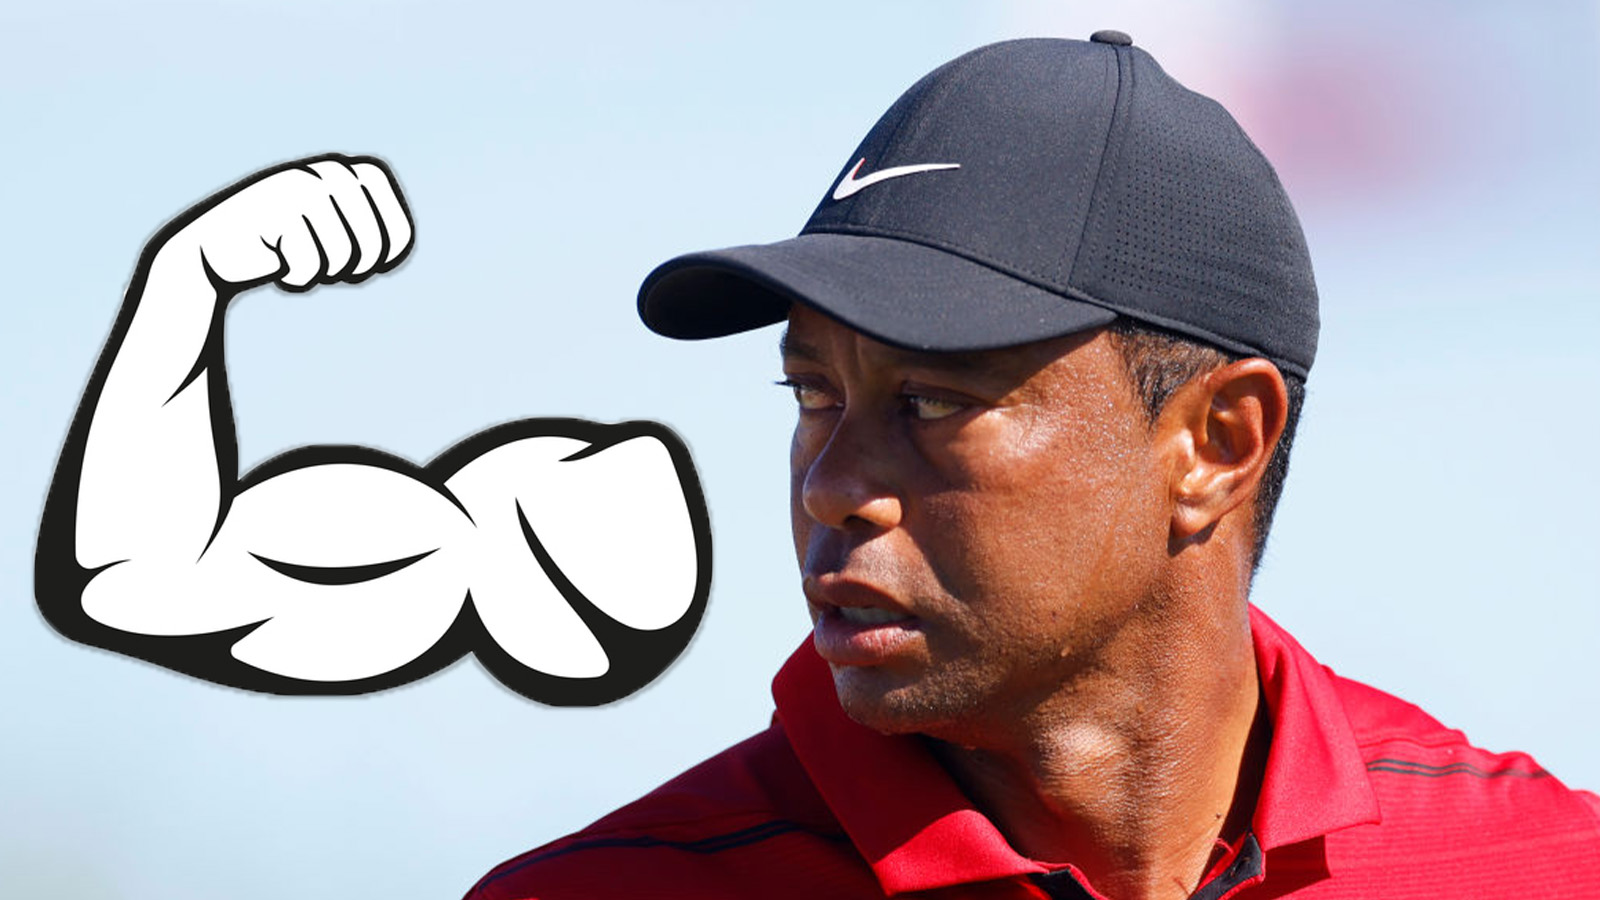 2023 Hero World Challenge Full Field: Tiger Woods and PGA Tour